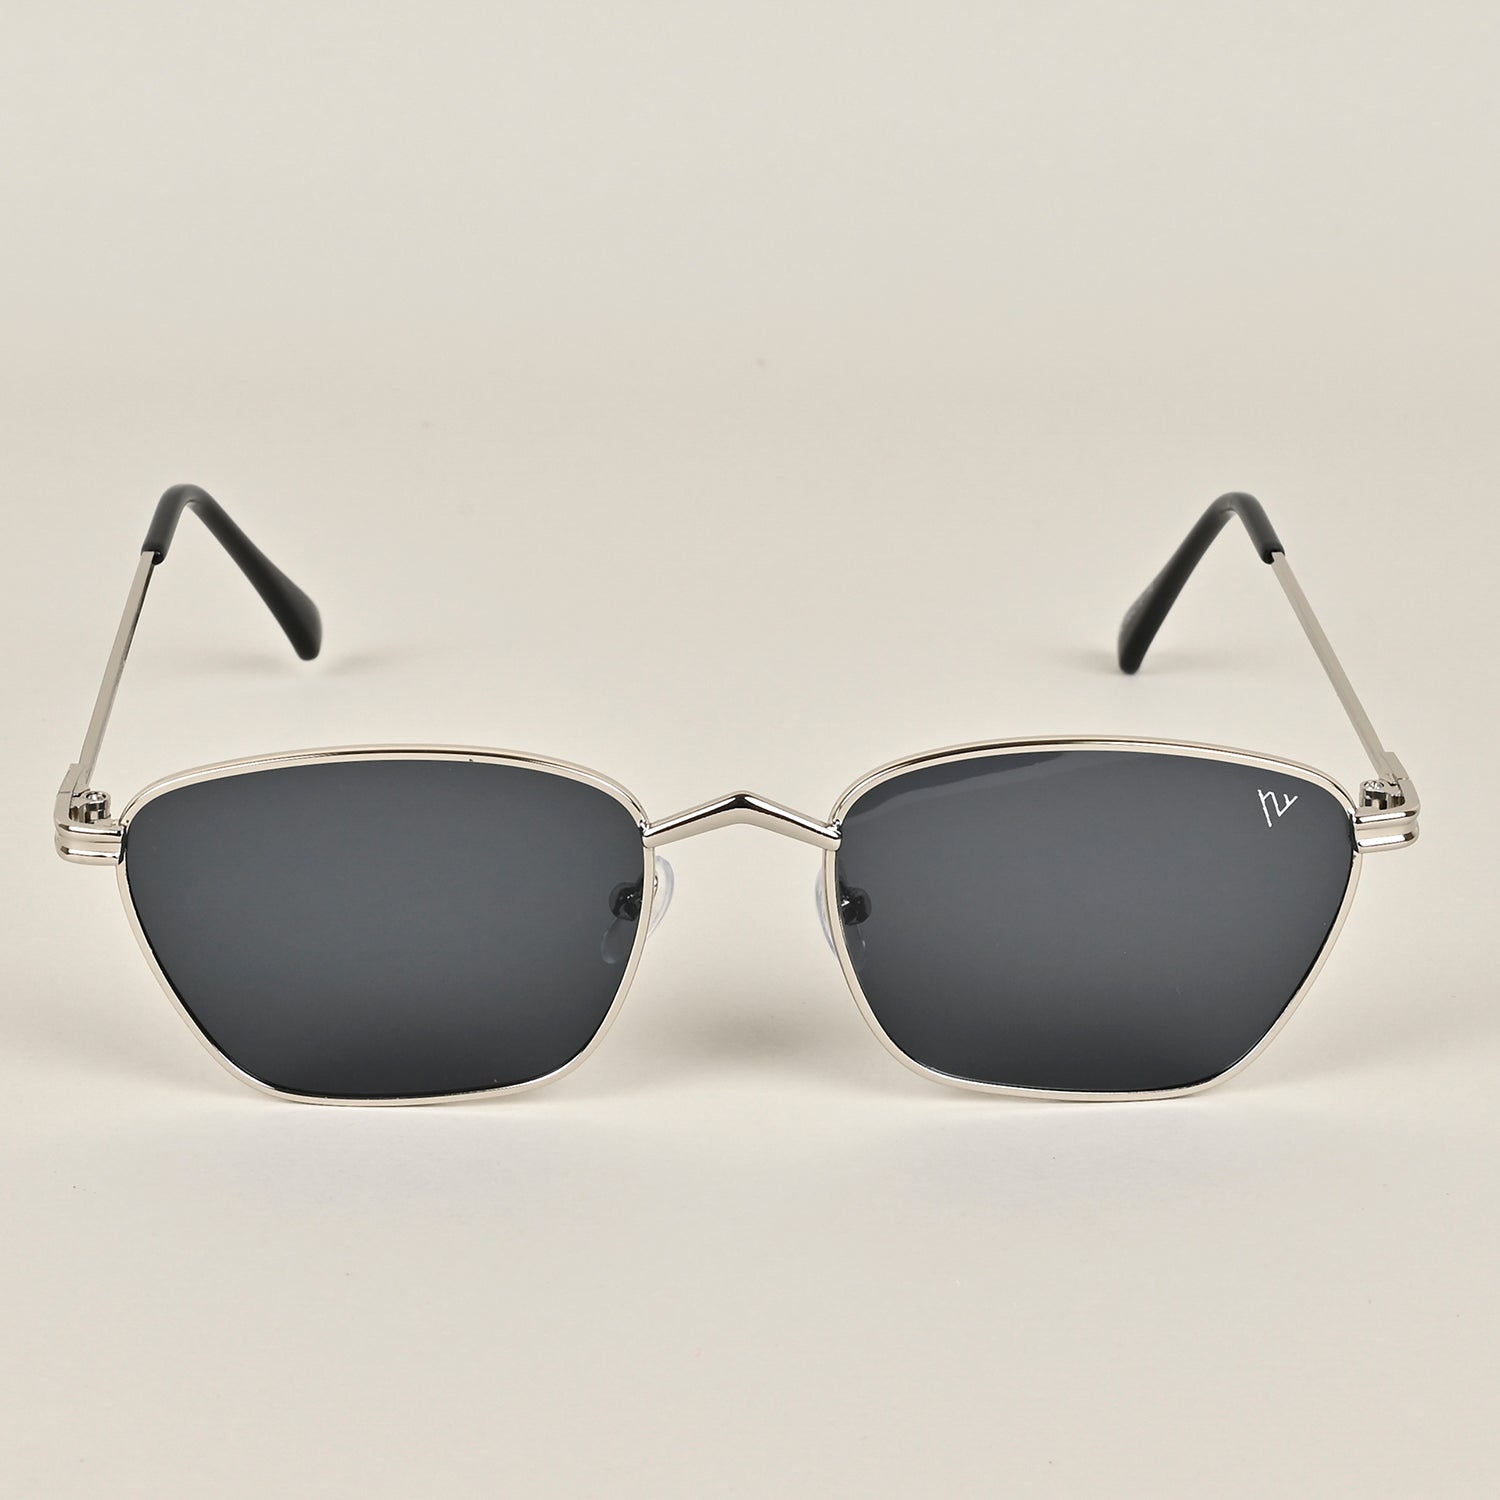 Voyage Black Silver Cateye Sunglasses MG3456